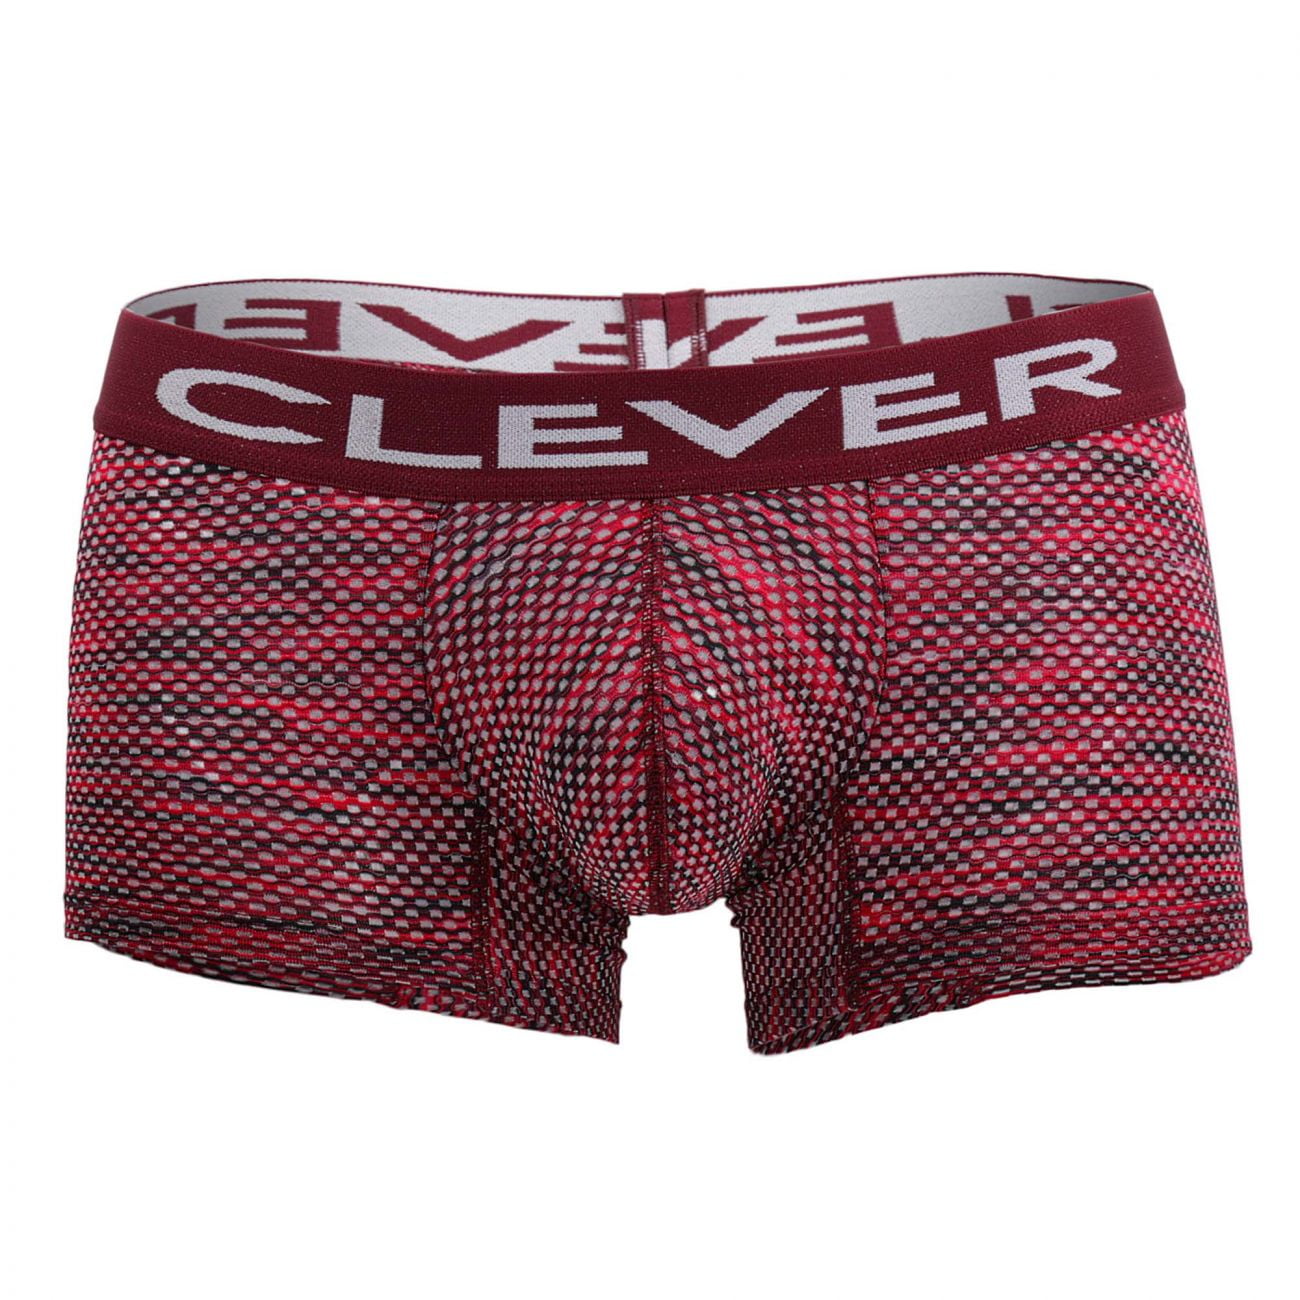 Clever Limited Edition Boxer Briefs Trunks Underwear for Men - Walmart.com